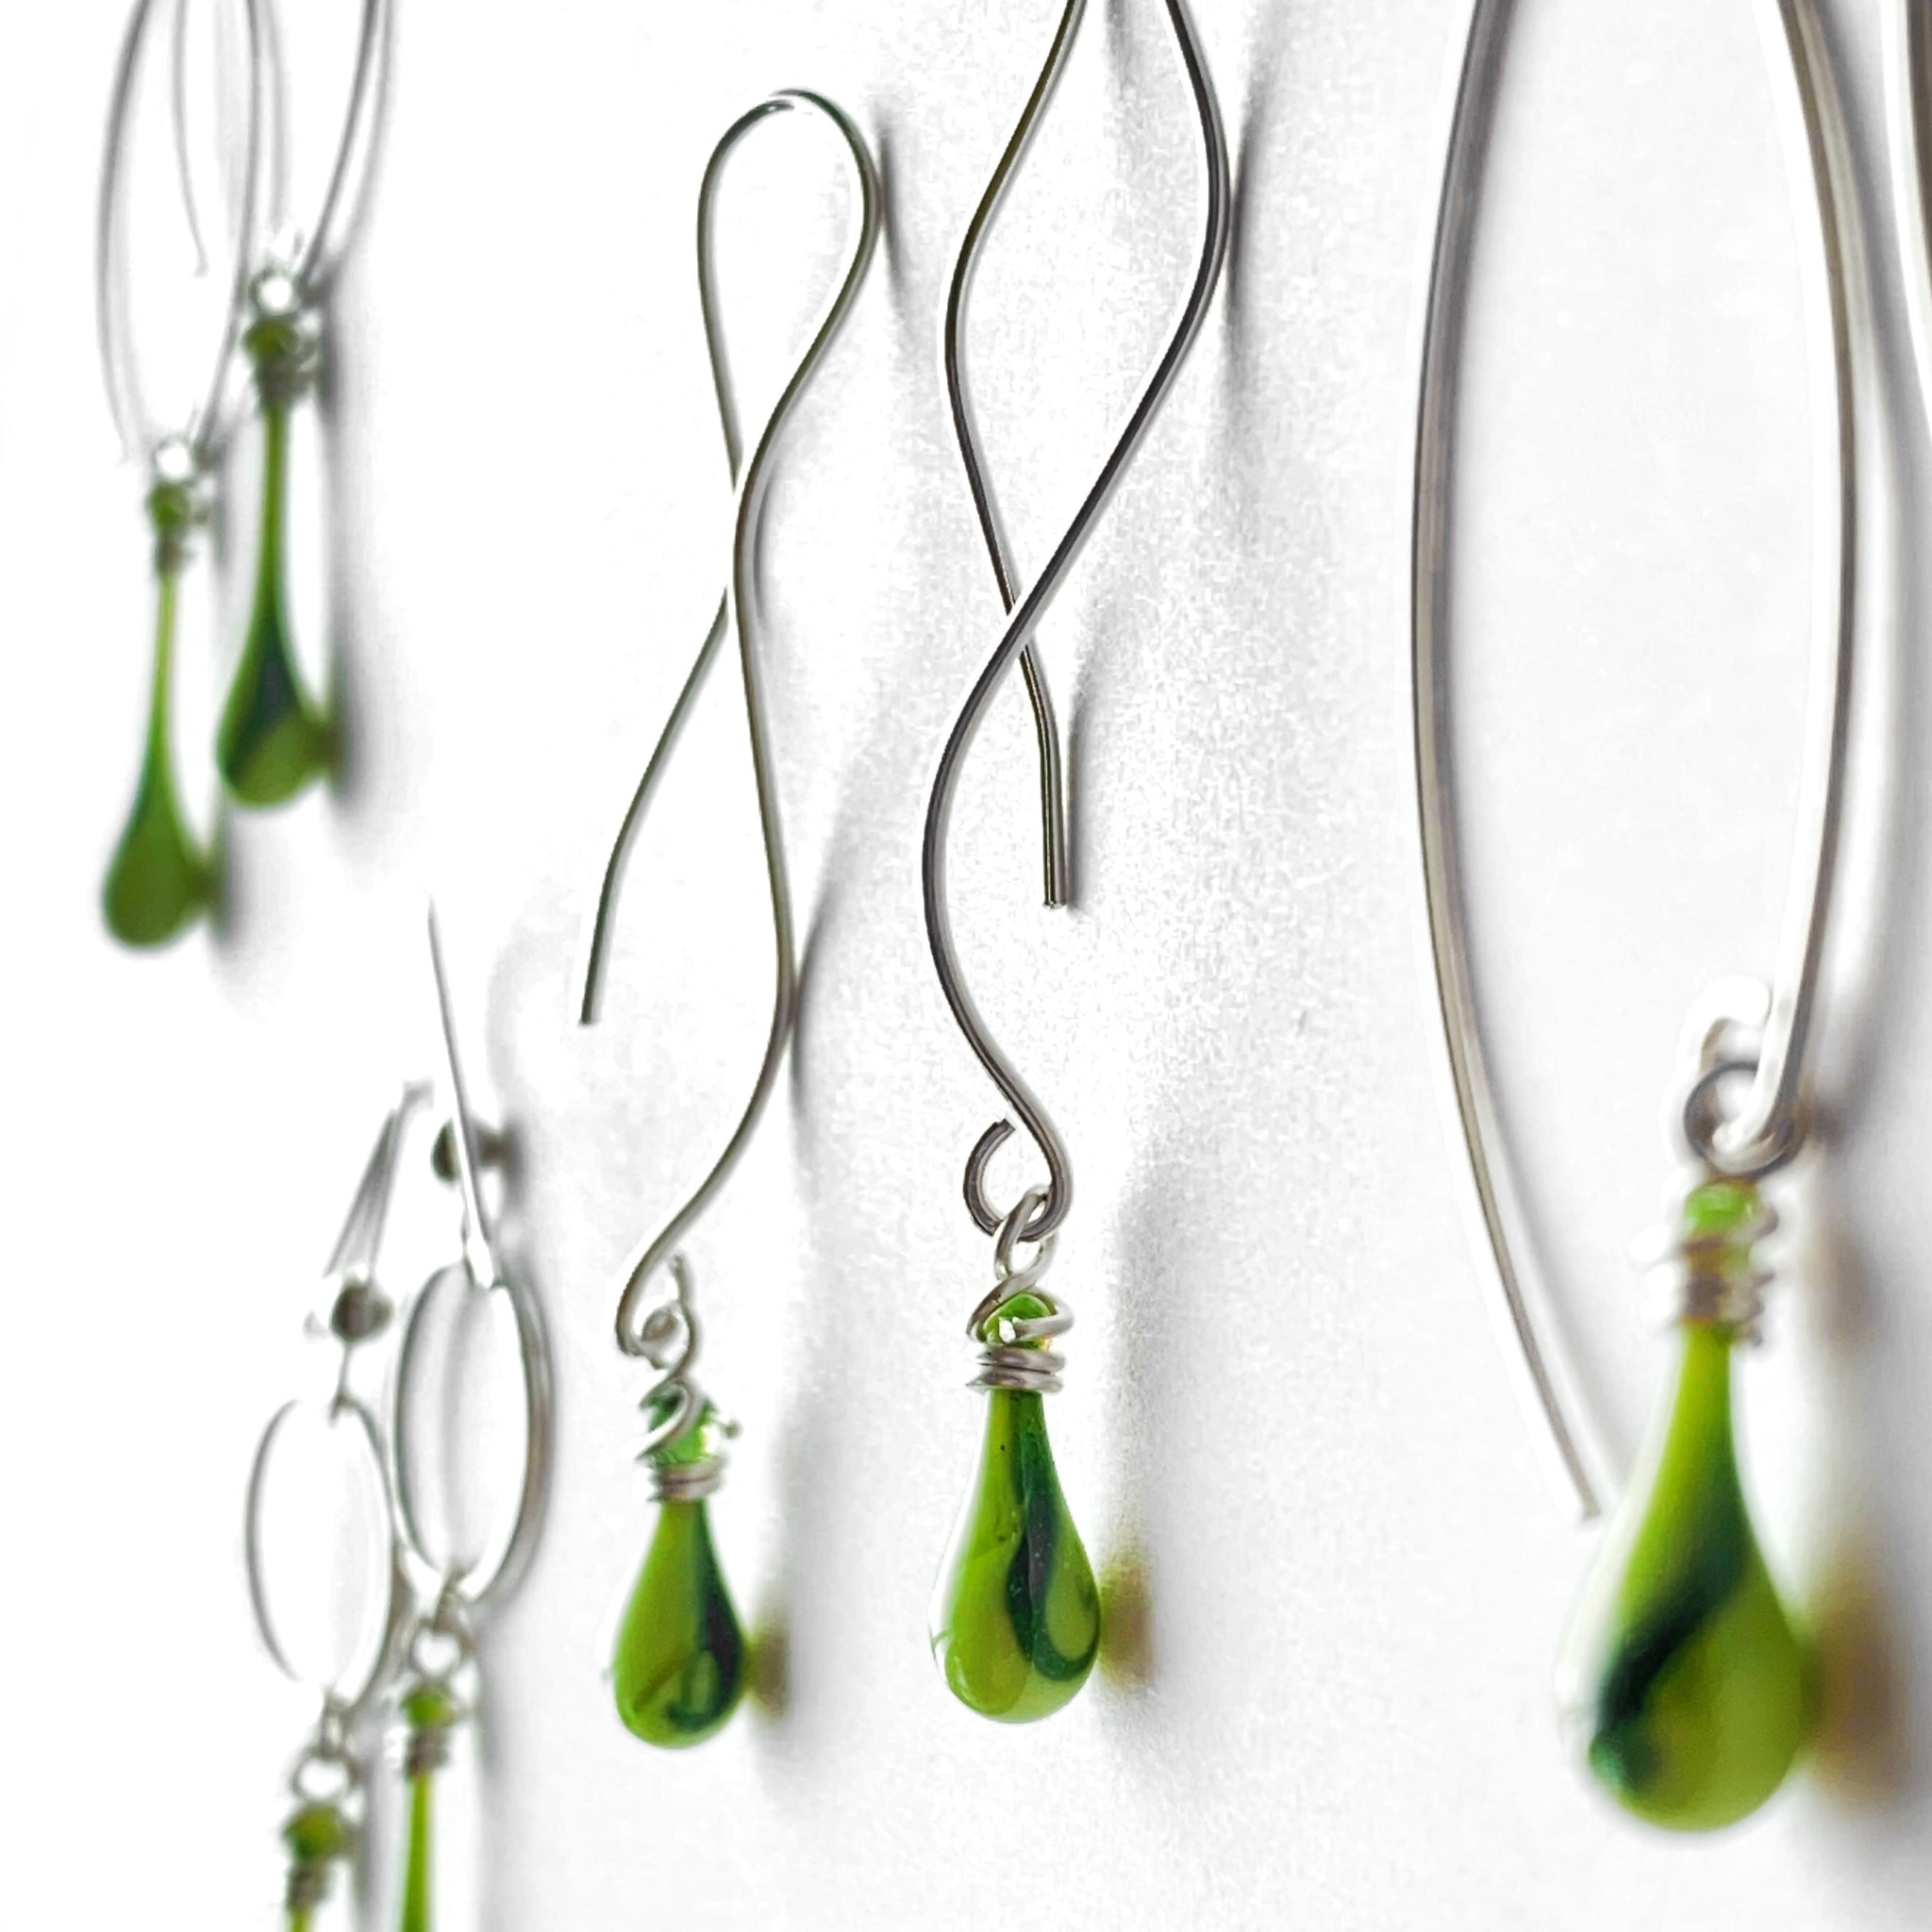 Striking lime green glass earrings with a streak of dark green with glitter!